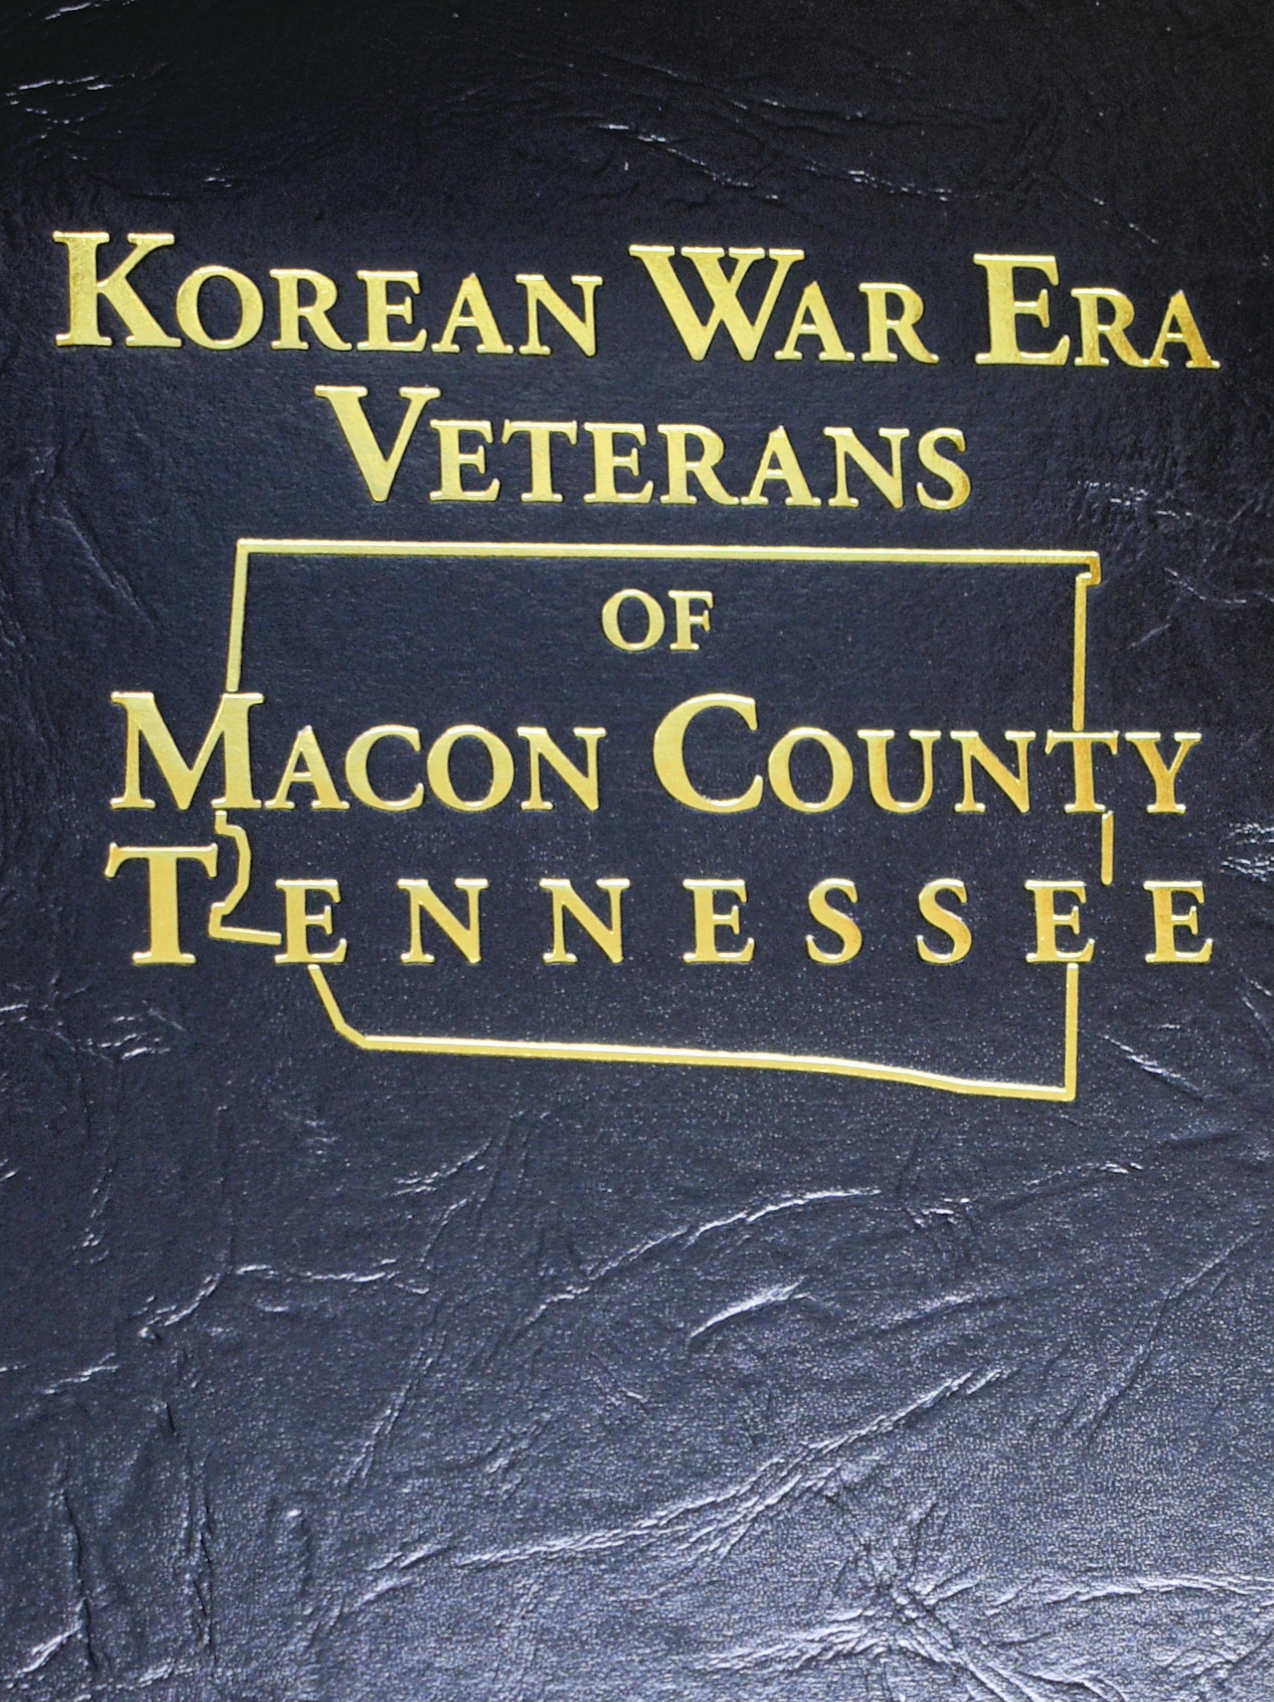 Korean War Era Veterans of Macon County Tennessee